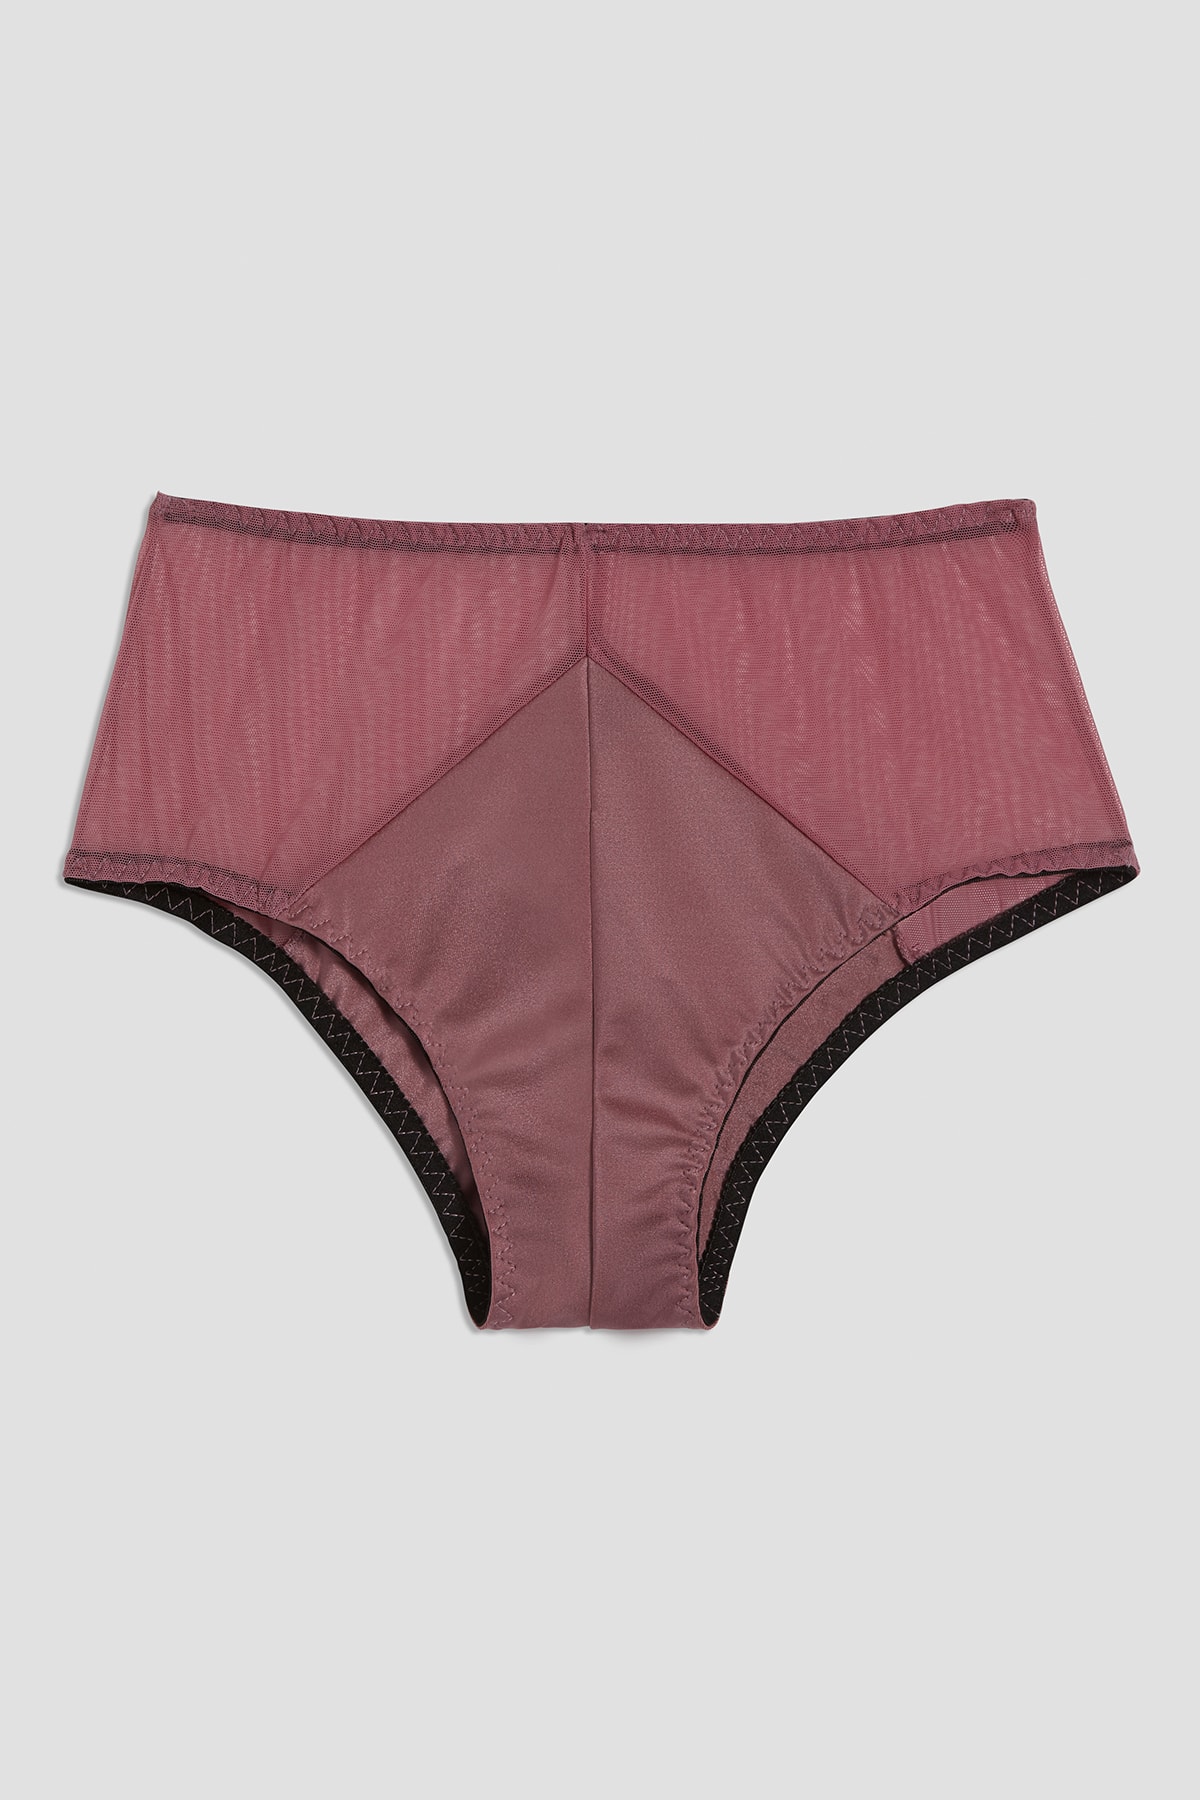 Frank and Oak Sokoloff Lingerie Underwear Burgundy Brief Panty